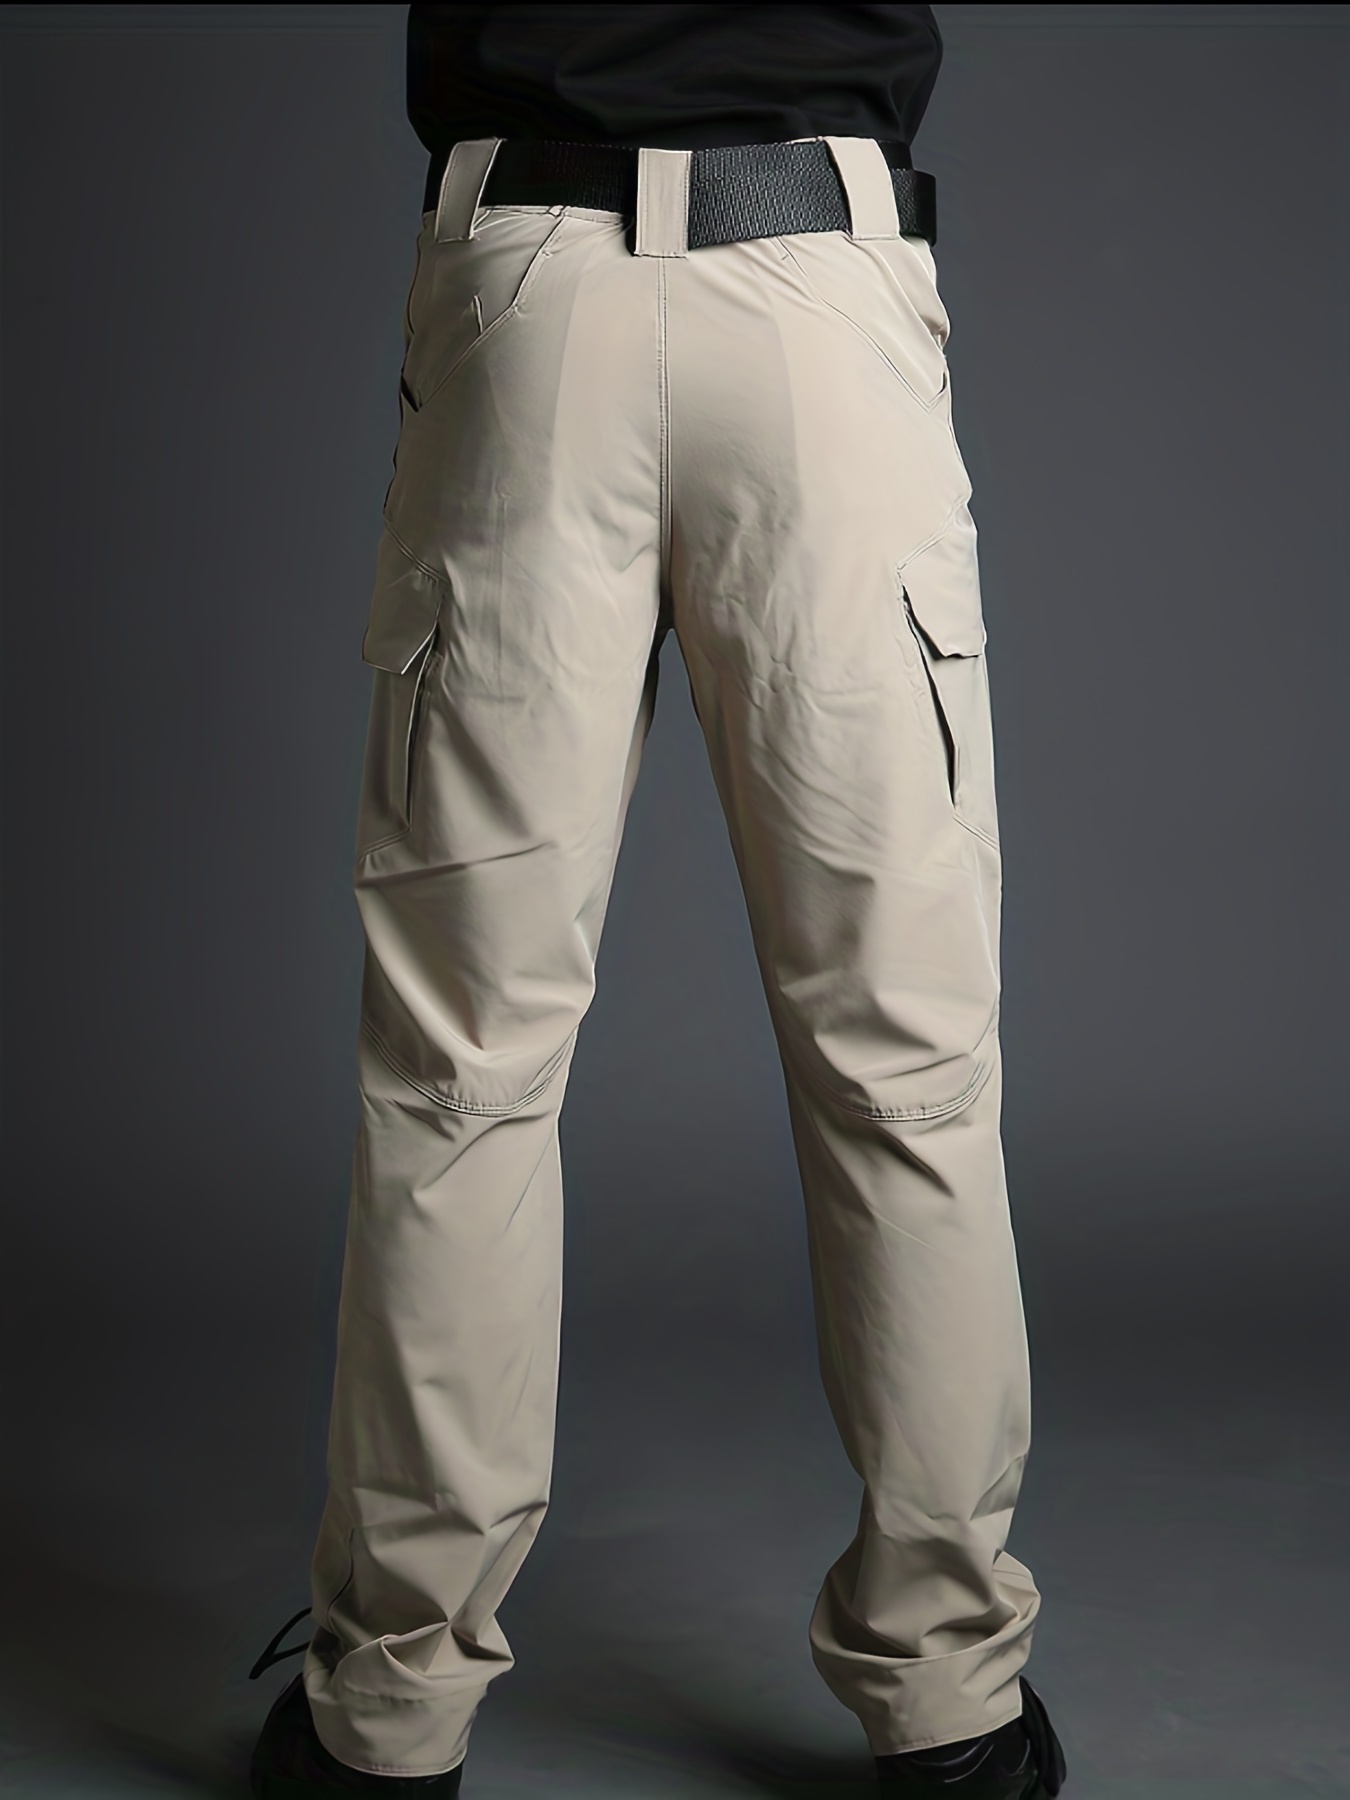 JIUKE Clearance Cargo Pants for Men Lightweight Outdoor Hiking